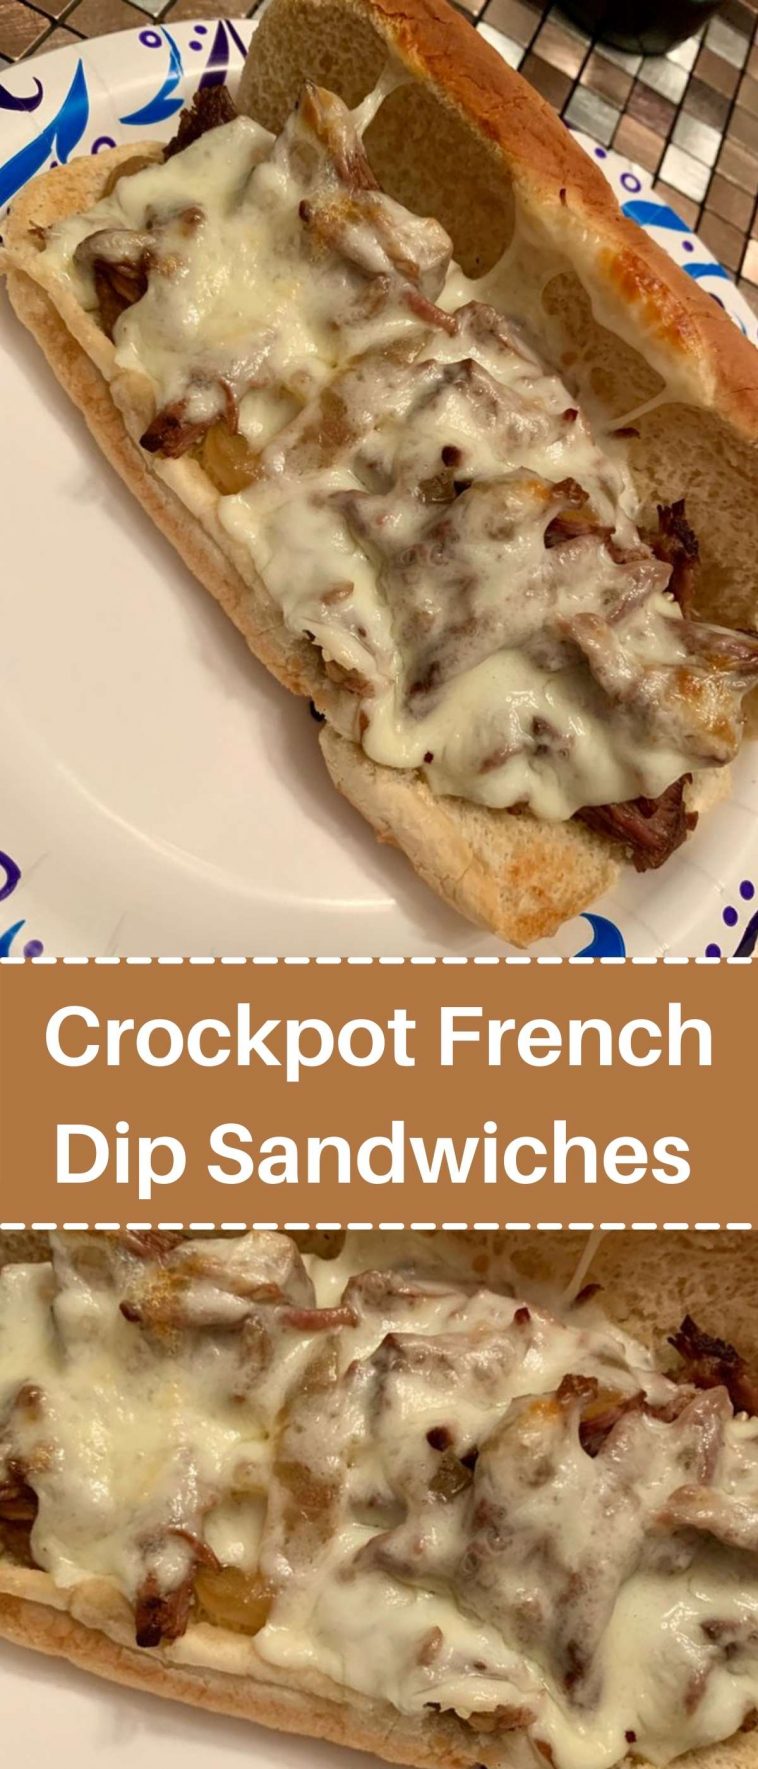 Crockpot French Dip Sandwiches !!!